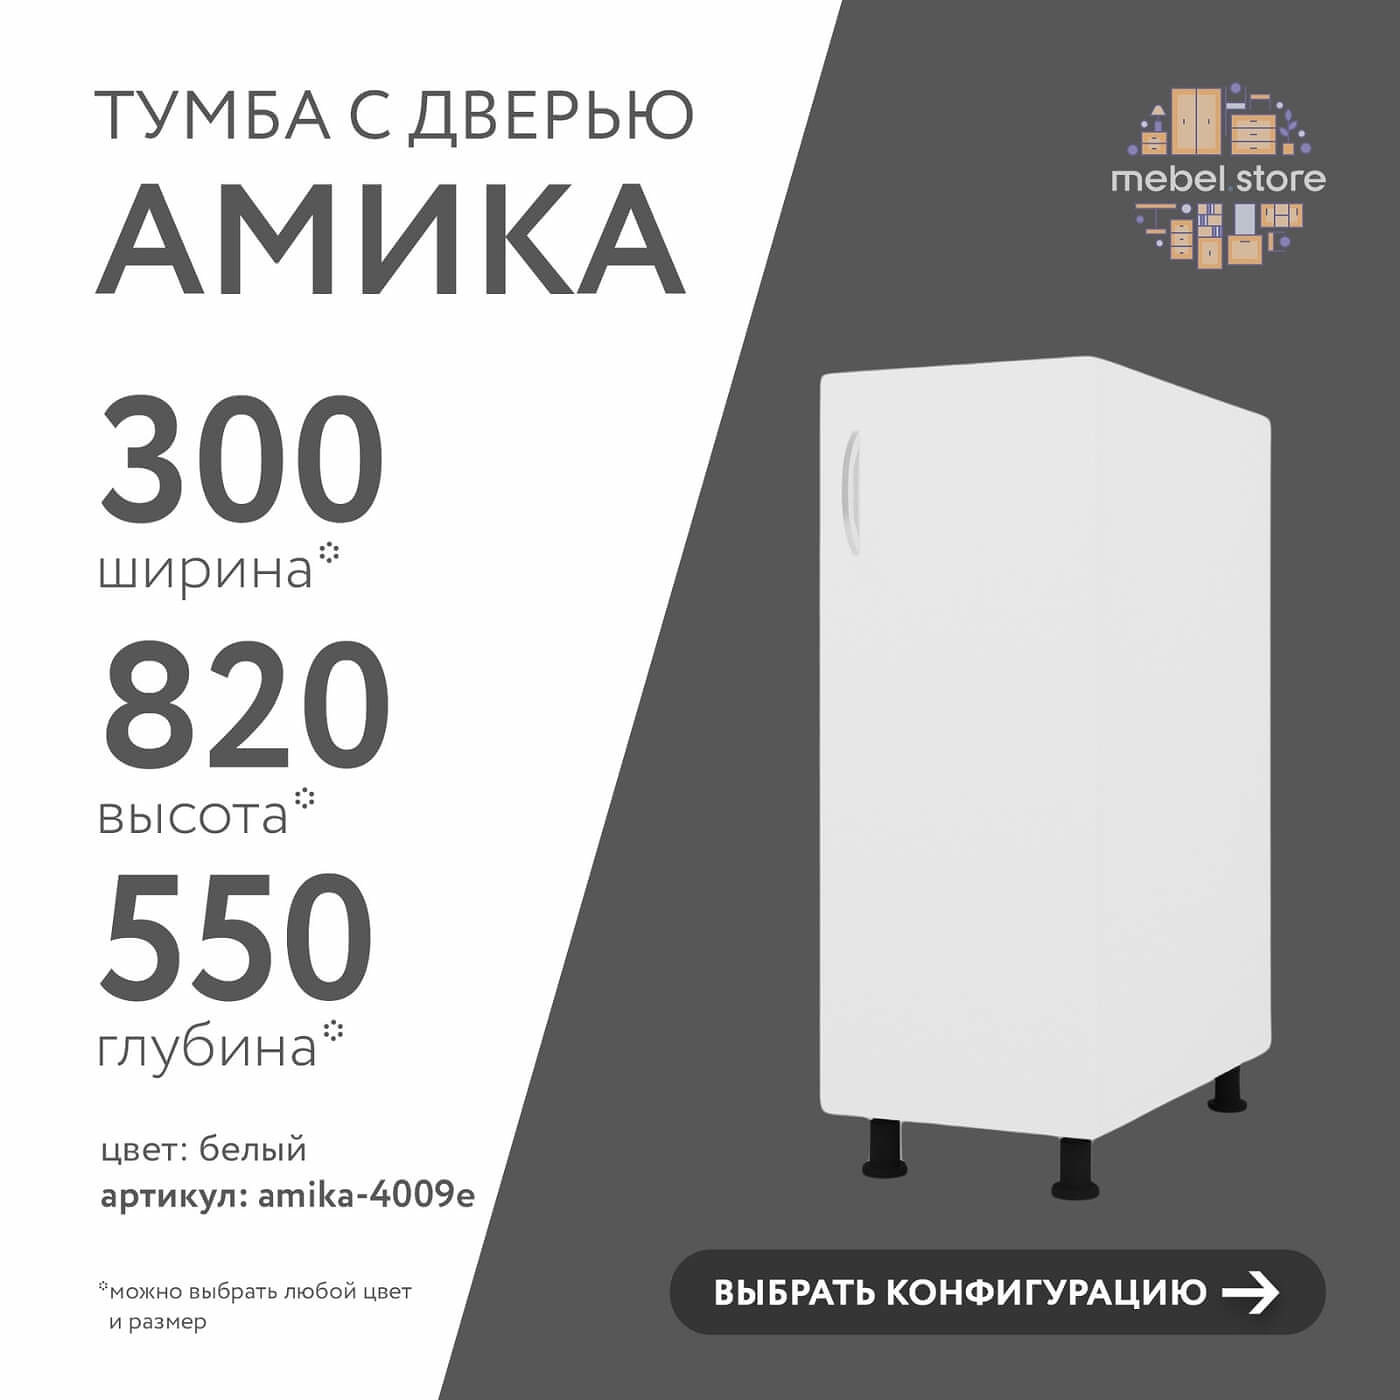 Тумба напольная Амика-4009e минимализм для кухни - фото 1 large